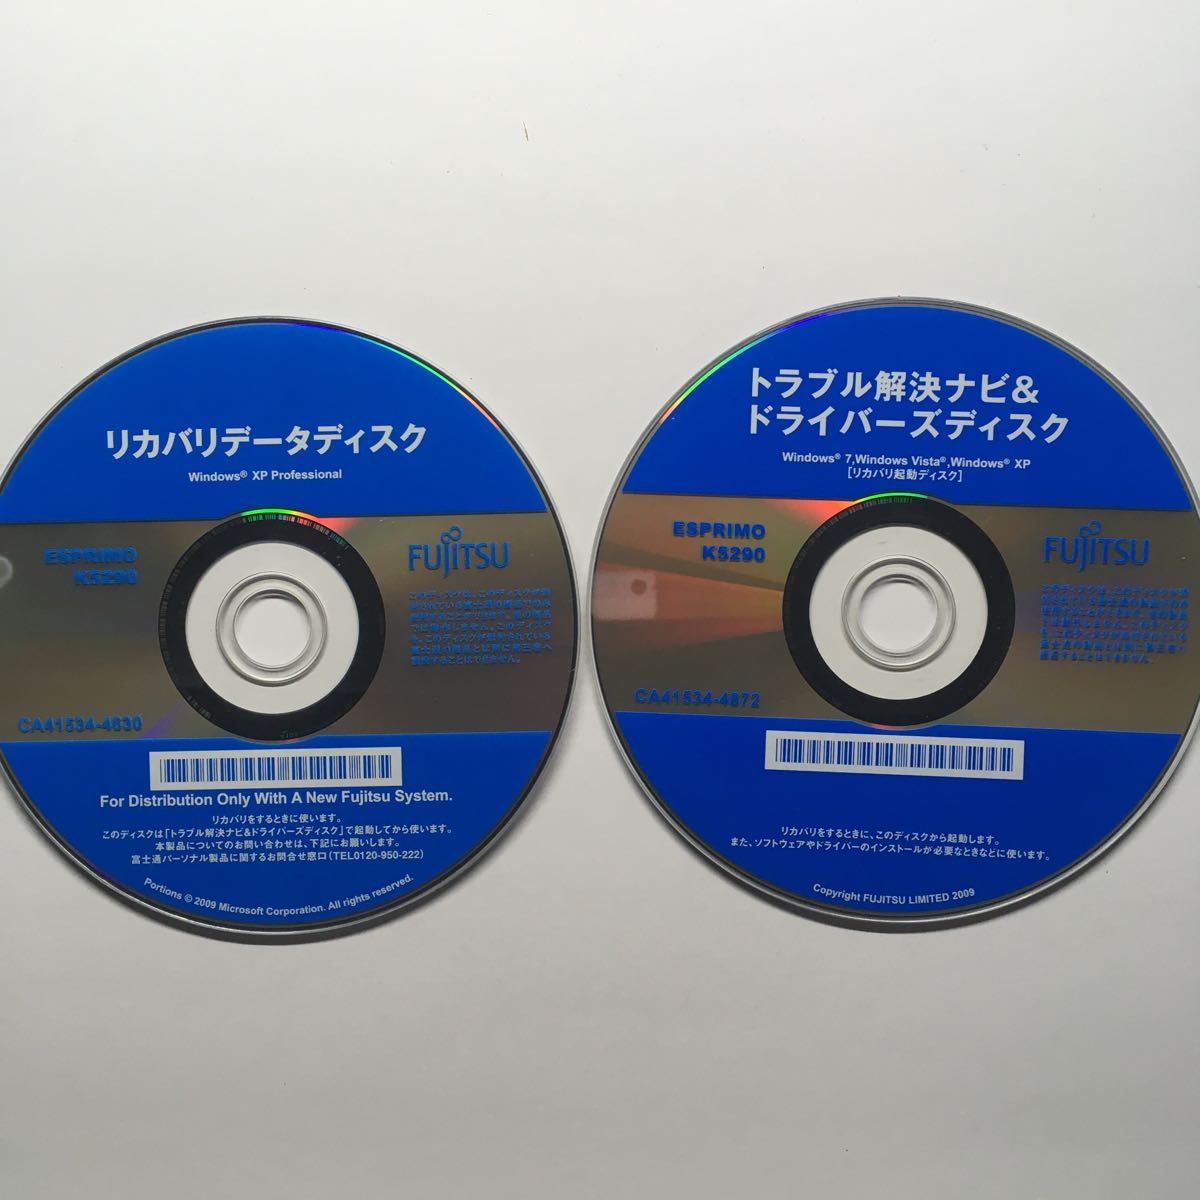 ESPRIMO K5290 用リカバリディスク WindowsXP Professional リカバリ リカバリー